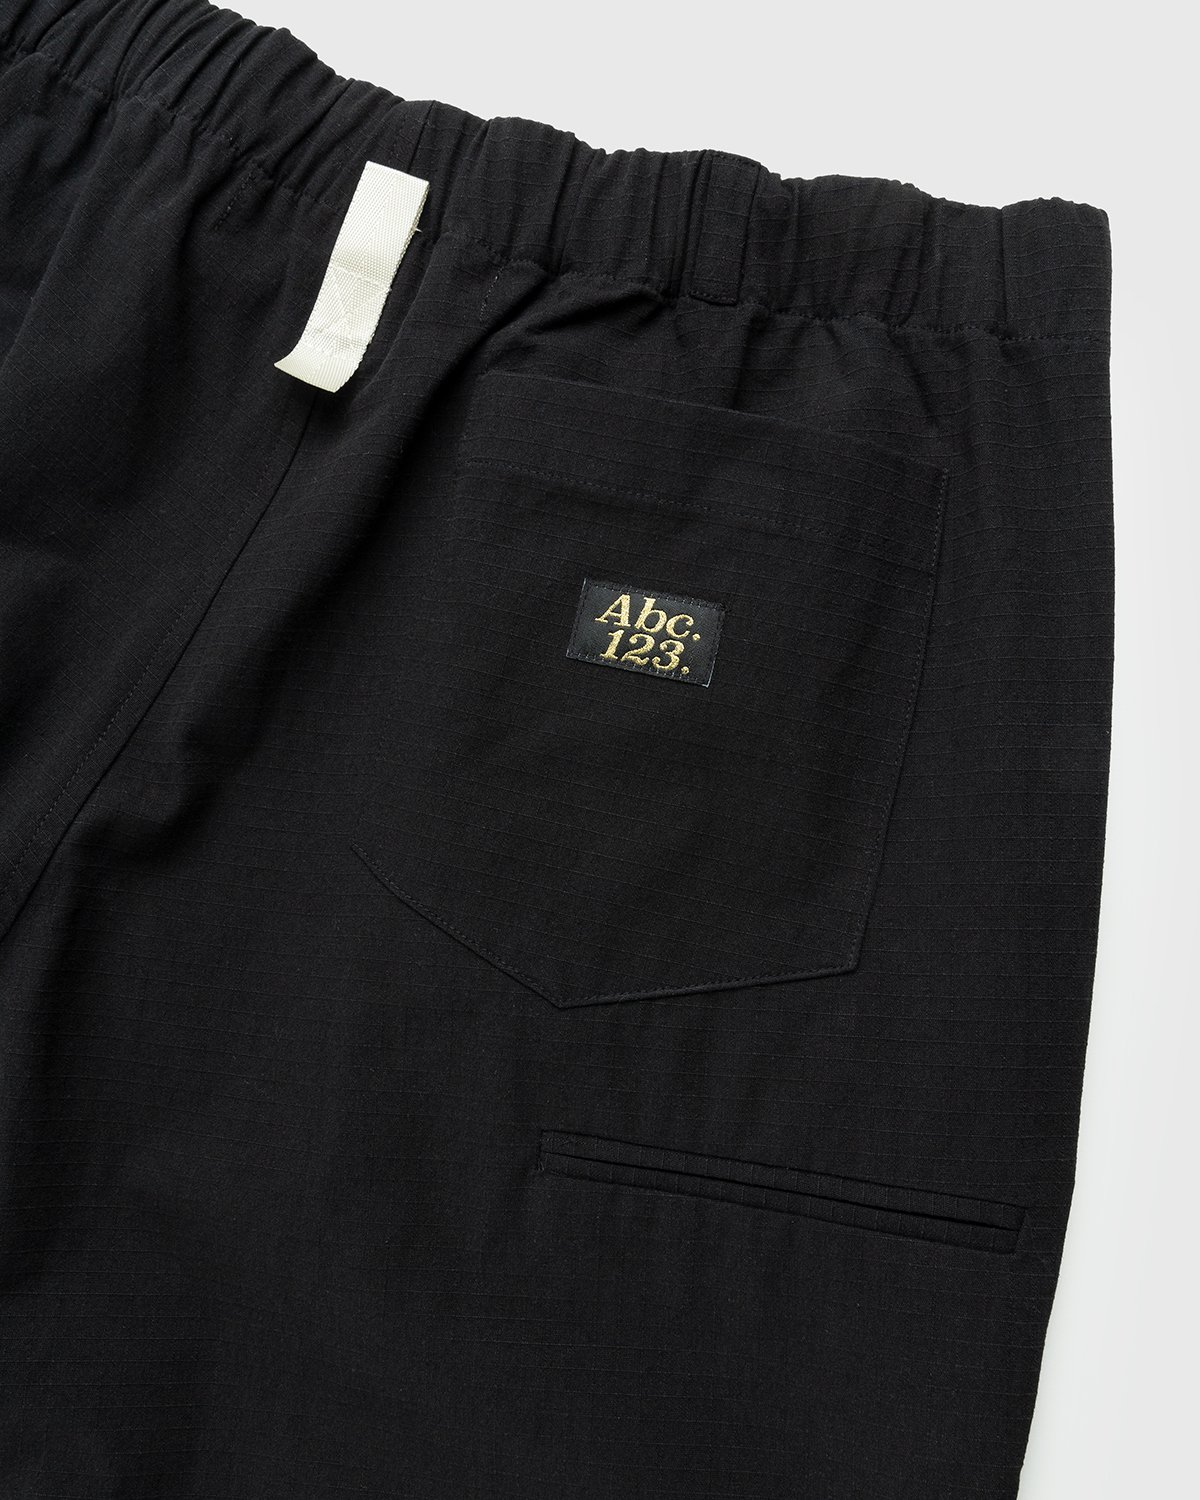 Abc. - Studio Work Pant Anthracite - Clothing - Black - Image 3